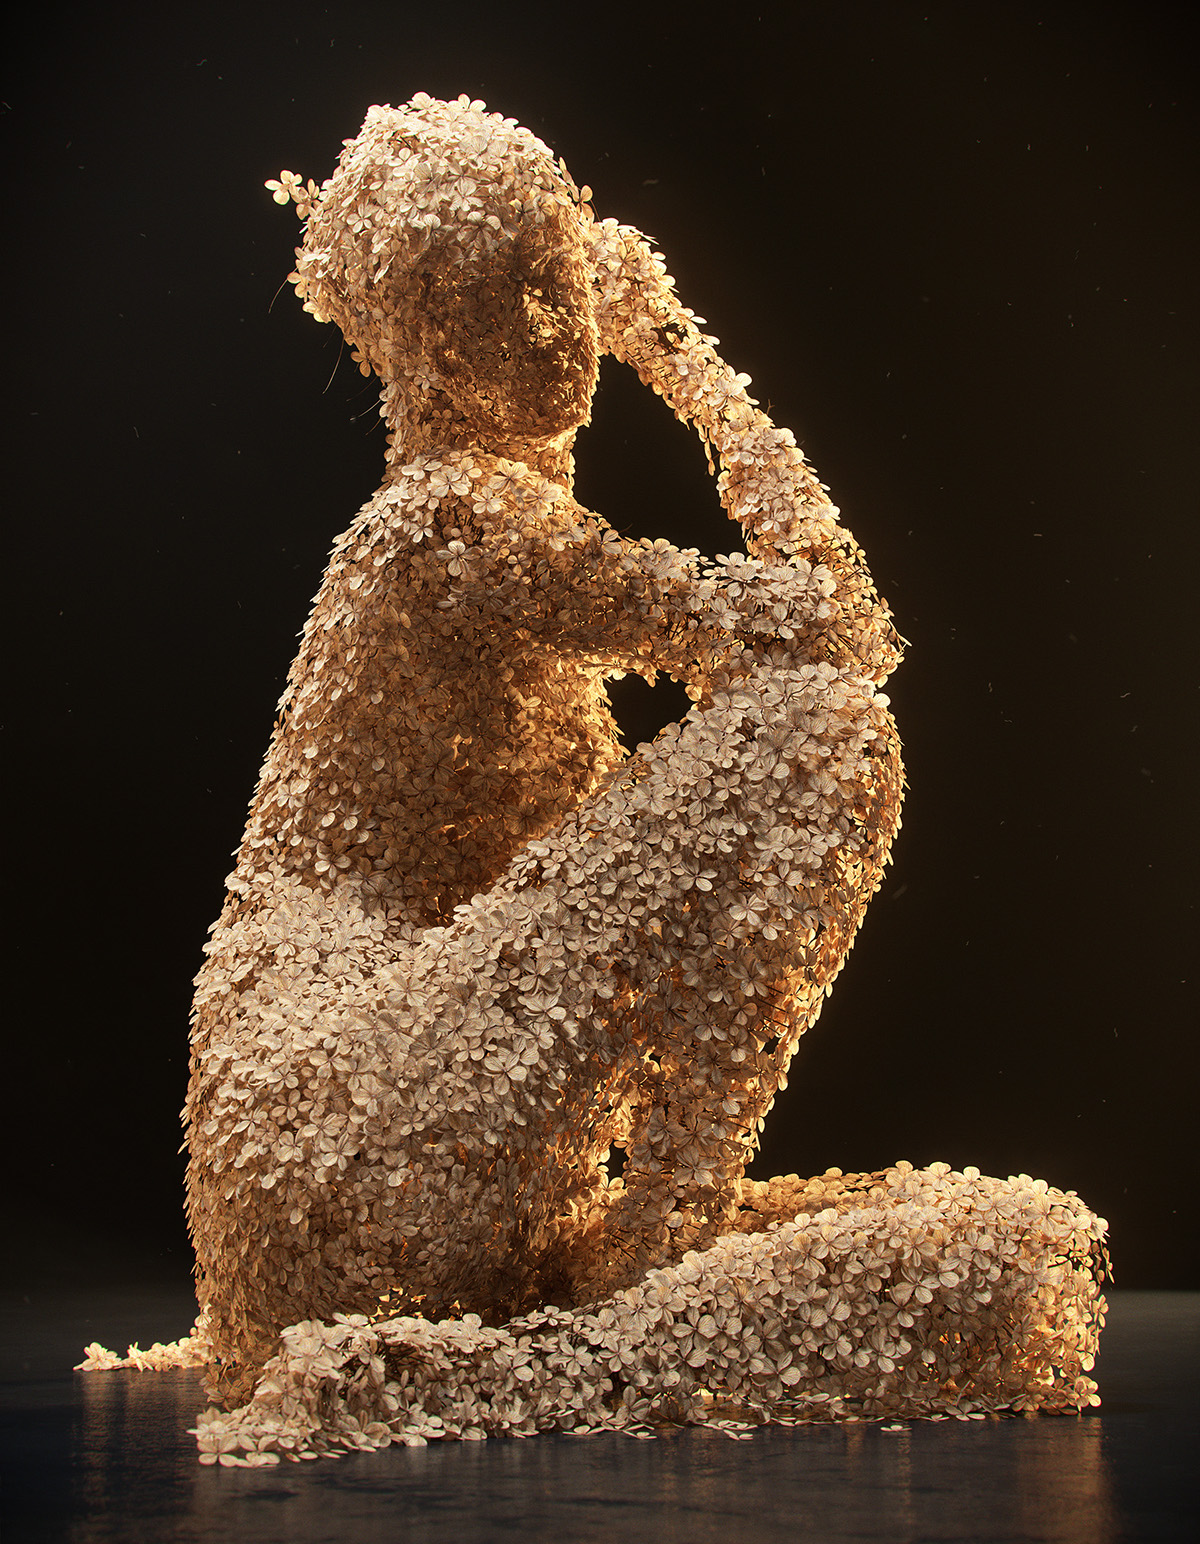 Adobe Portfolio flower figure dry sculpture women nude body pose